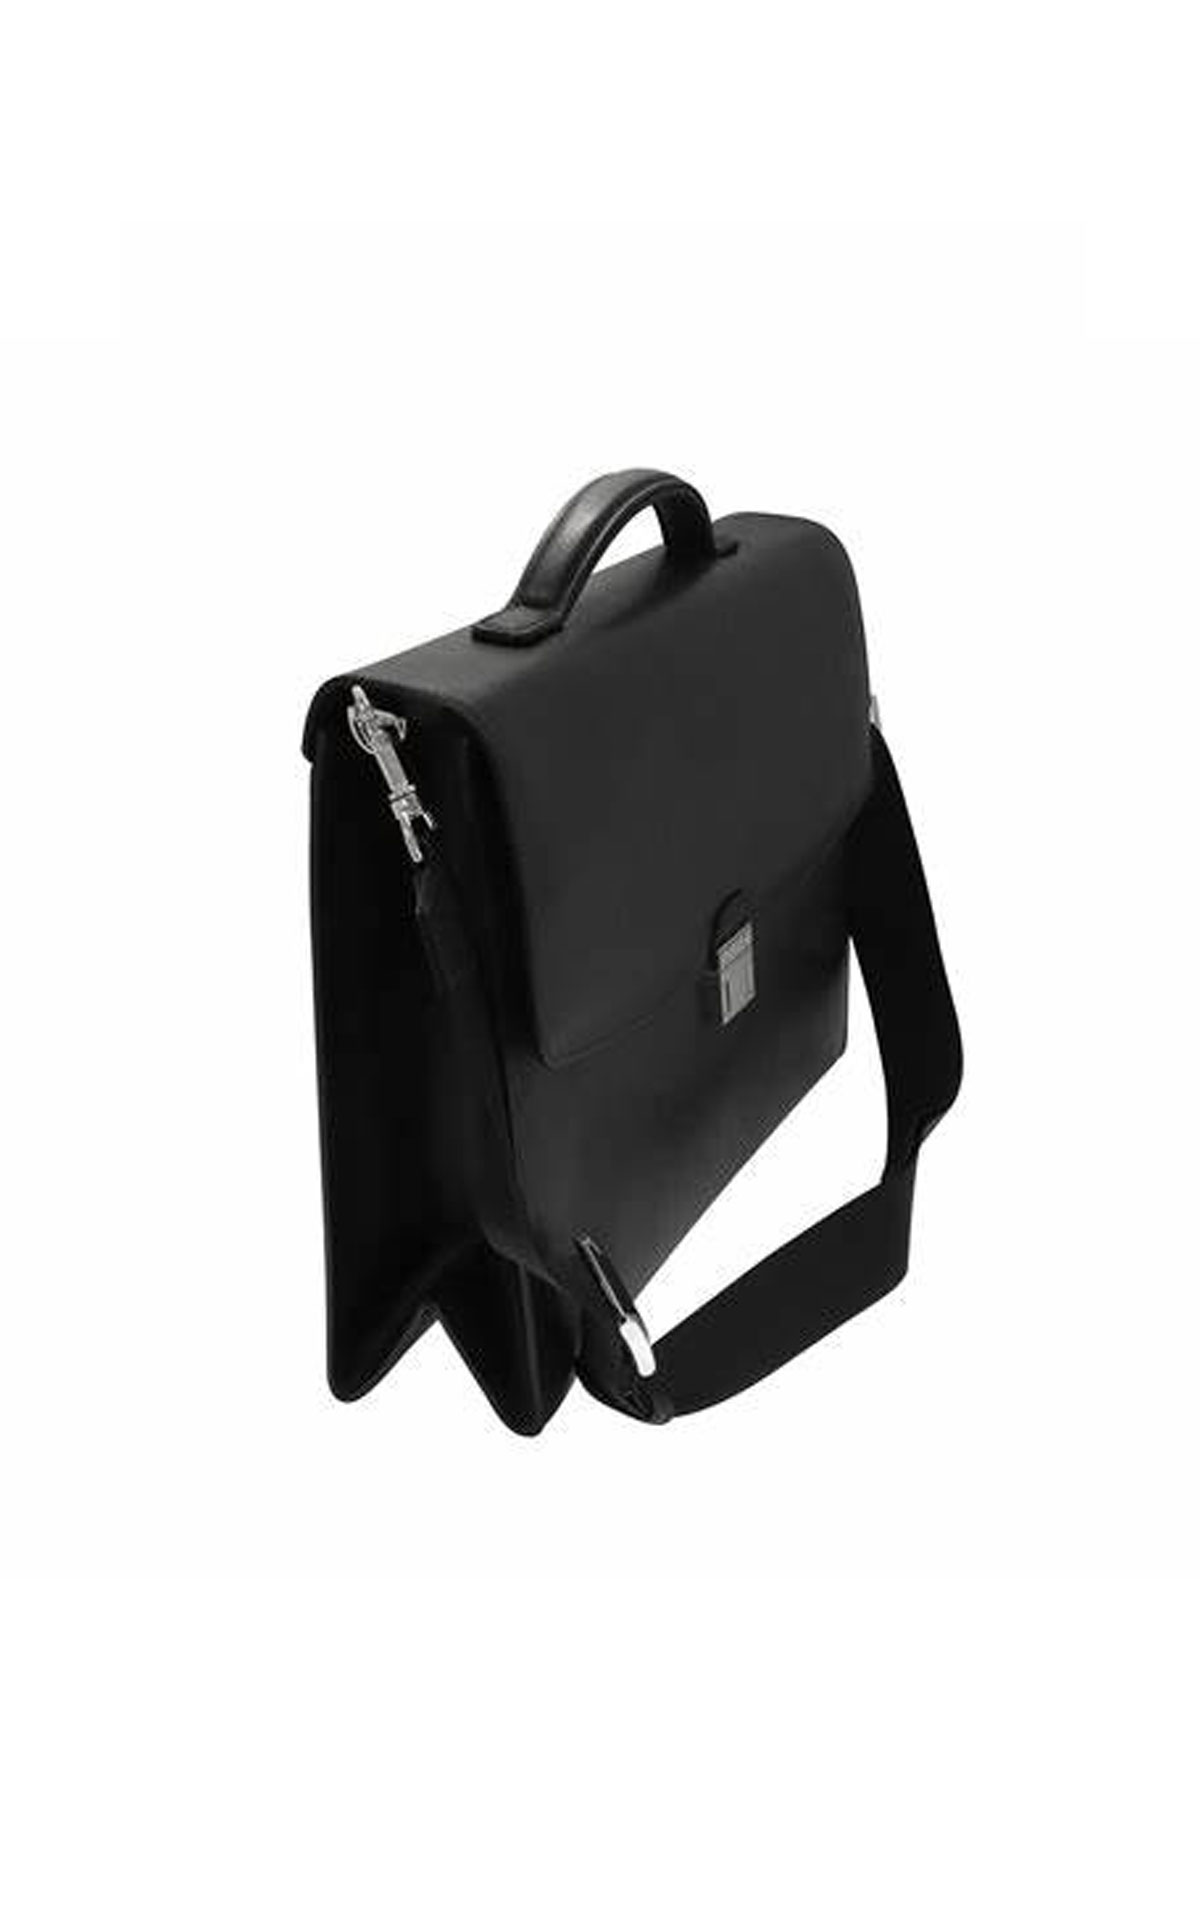 Montblanc Satorial briefcase single gusset black from Bicester Village